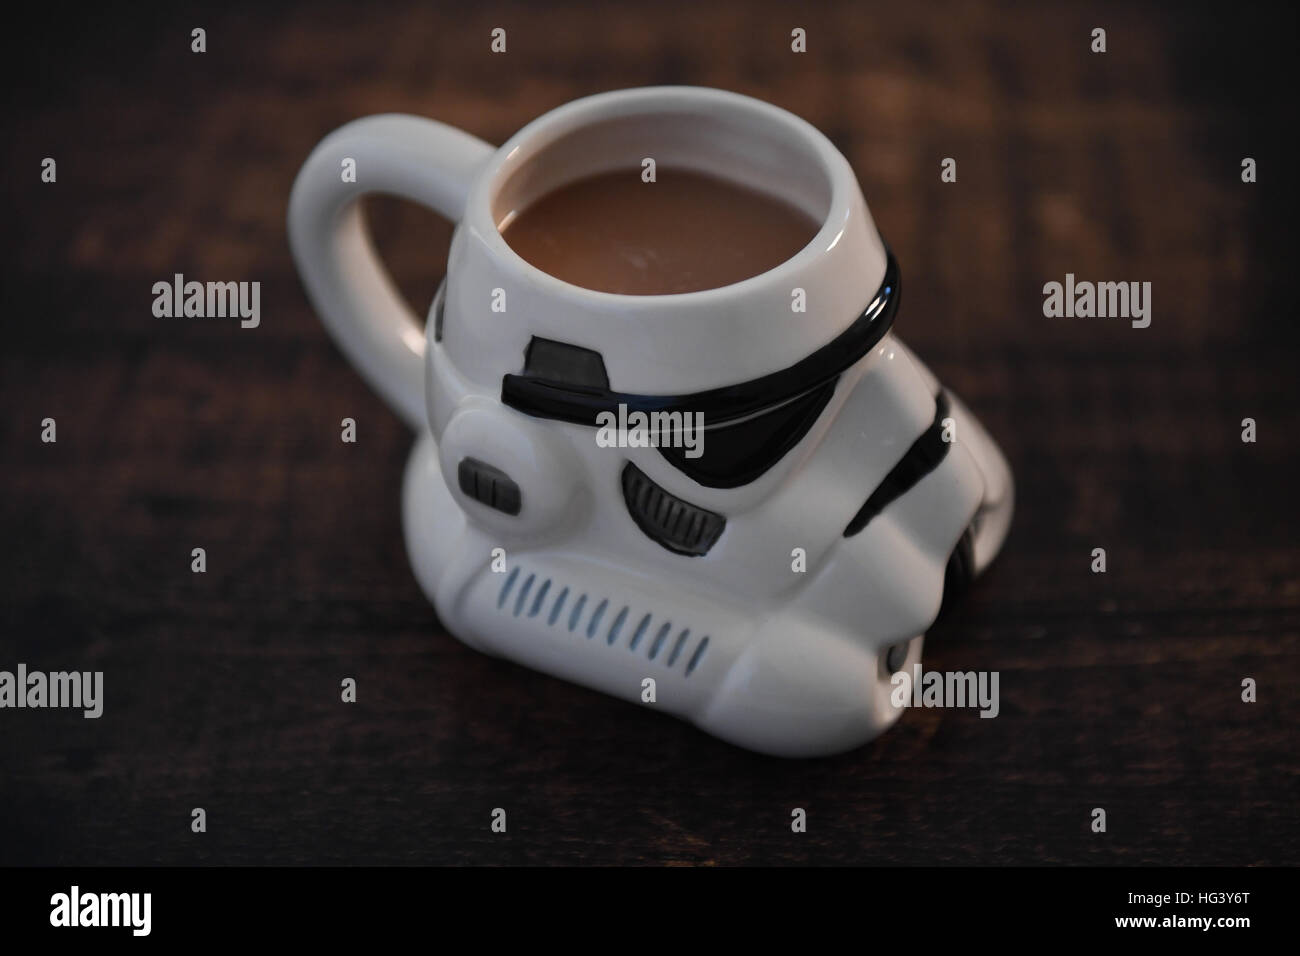 https://c8.alamy.com/comp/HG3Y6T/storm-trooper-helmet-mug-filled-with-tea-HG3Y6T.jpg